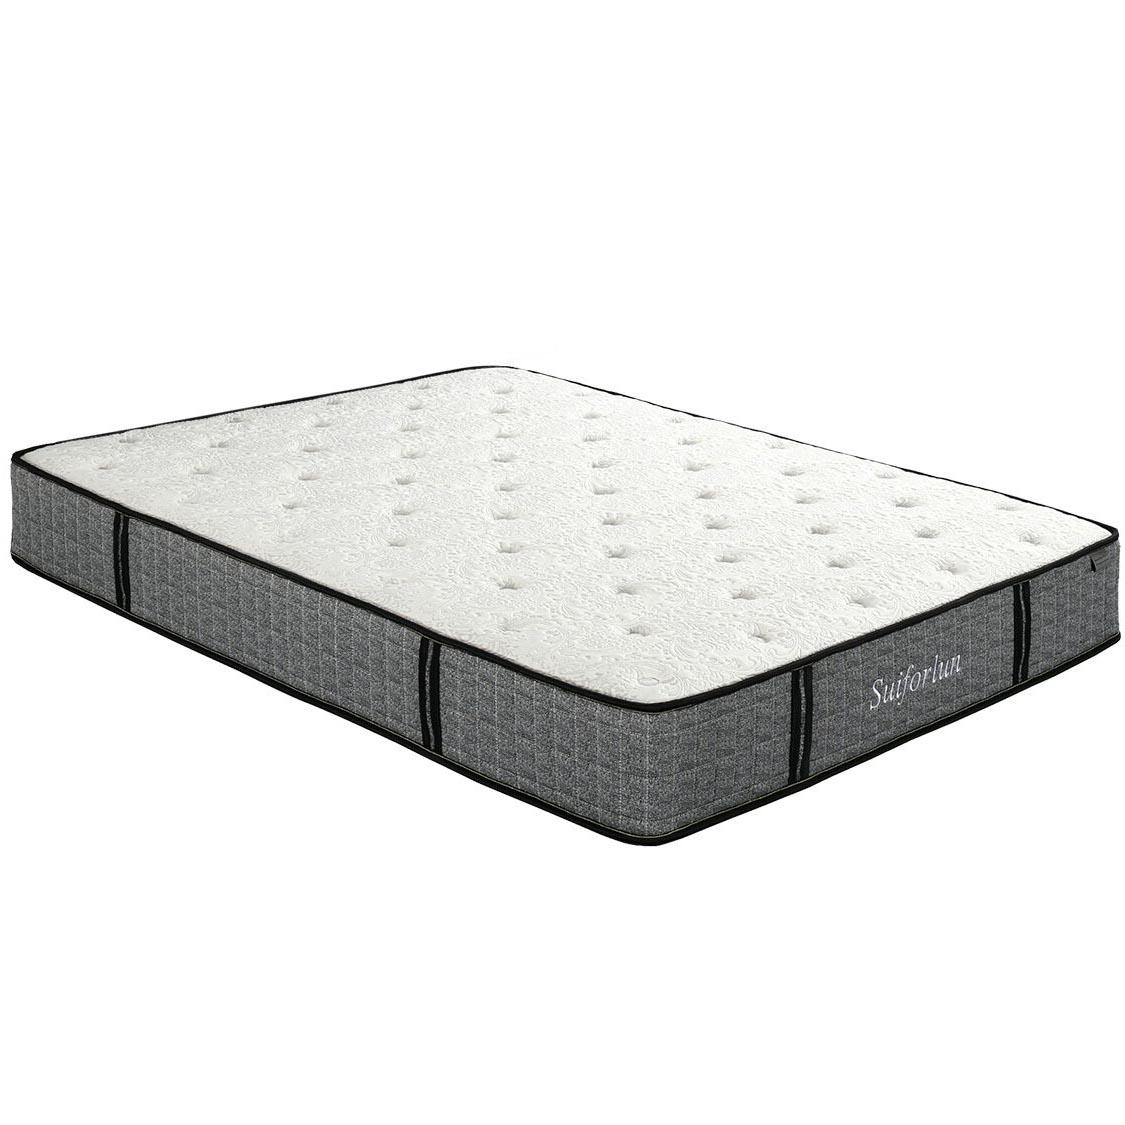 Suiforlun mattress pocket spring twin hybrid mattress customized for family-2